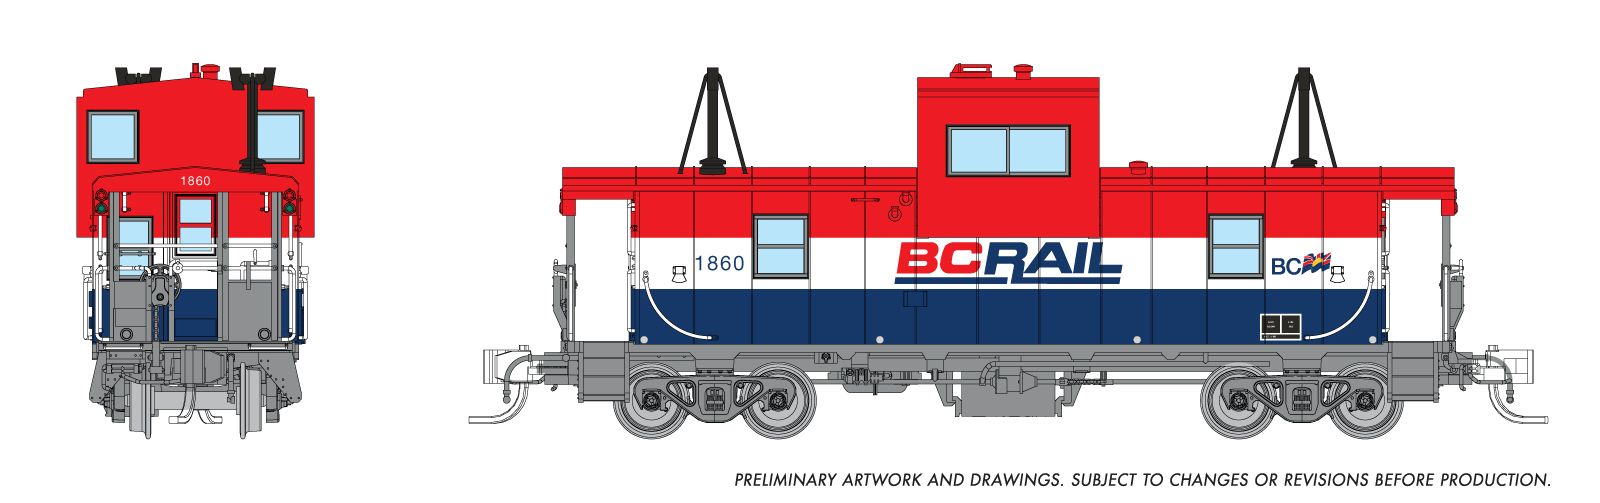 Rapido 510013 N Wide Vision Caboose: BC Rail - Red/White/Blue Scheme: #1860